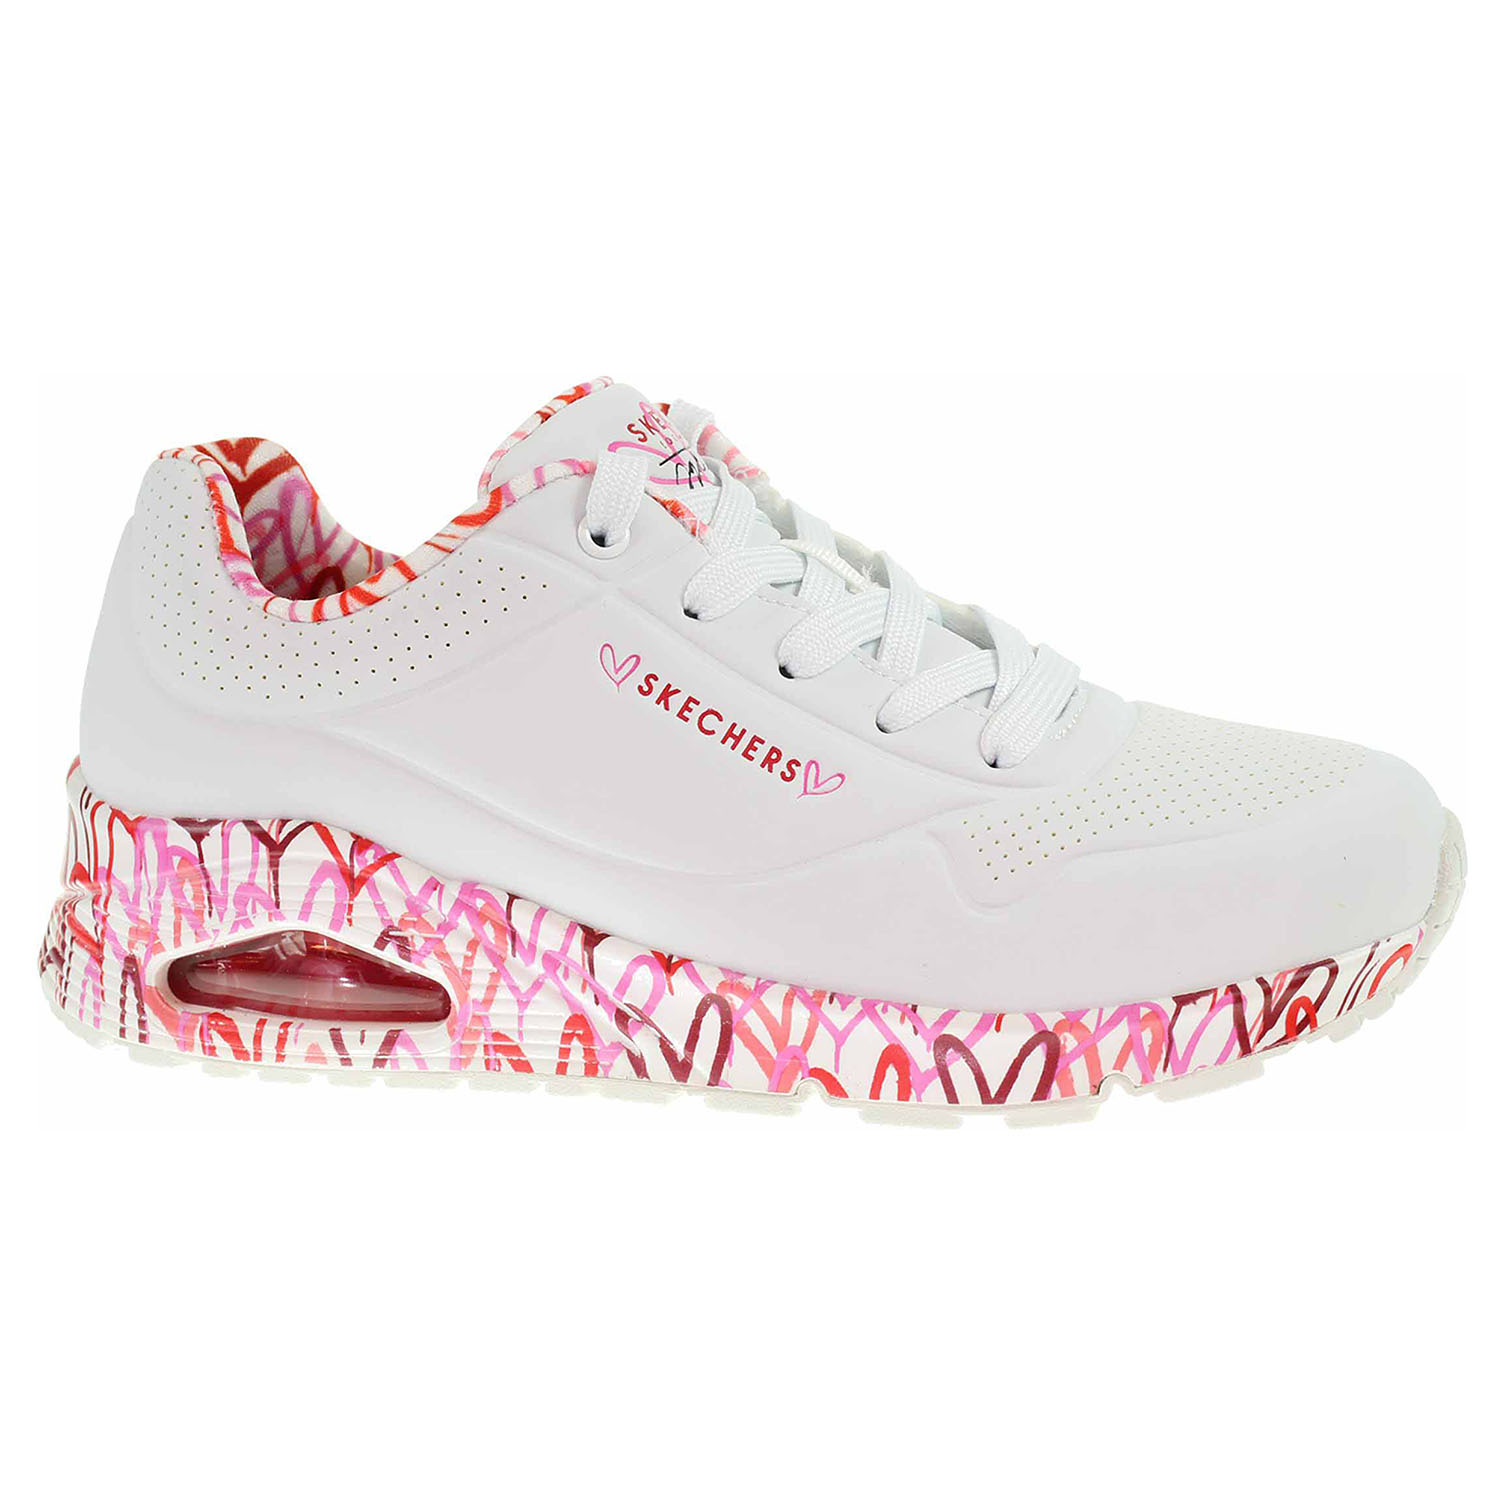 Skechers Uno - Loving Love white-red-pink